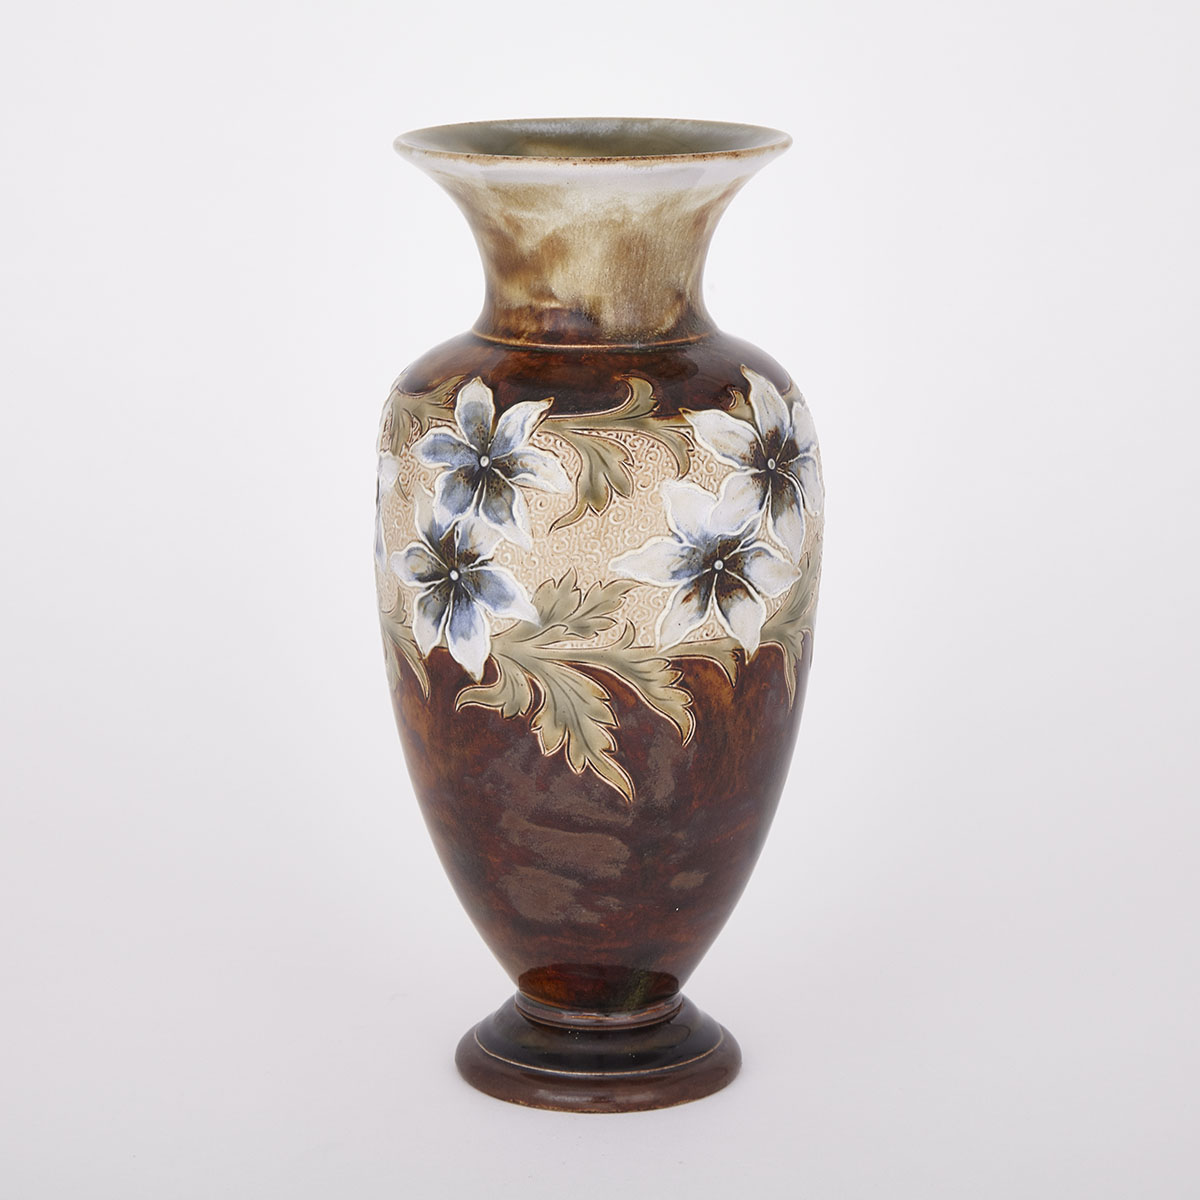 Royal Doulton ‘Art Union of London’ Stoneware Vase, Eliza Simmance and Emily J. Partington, early 20th century